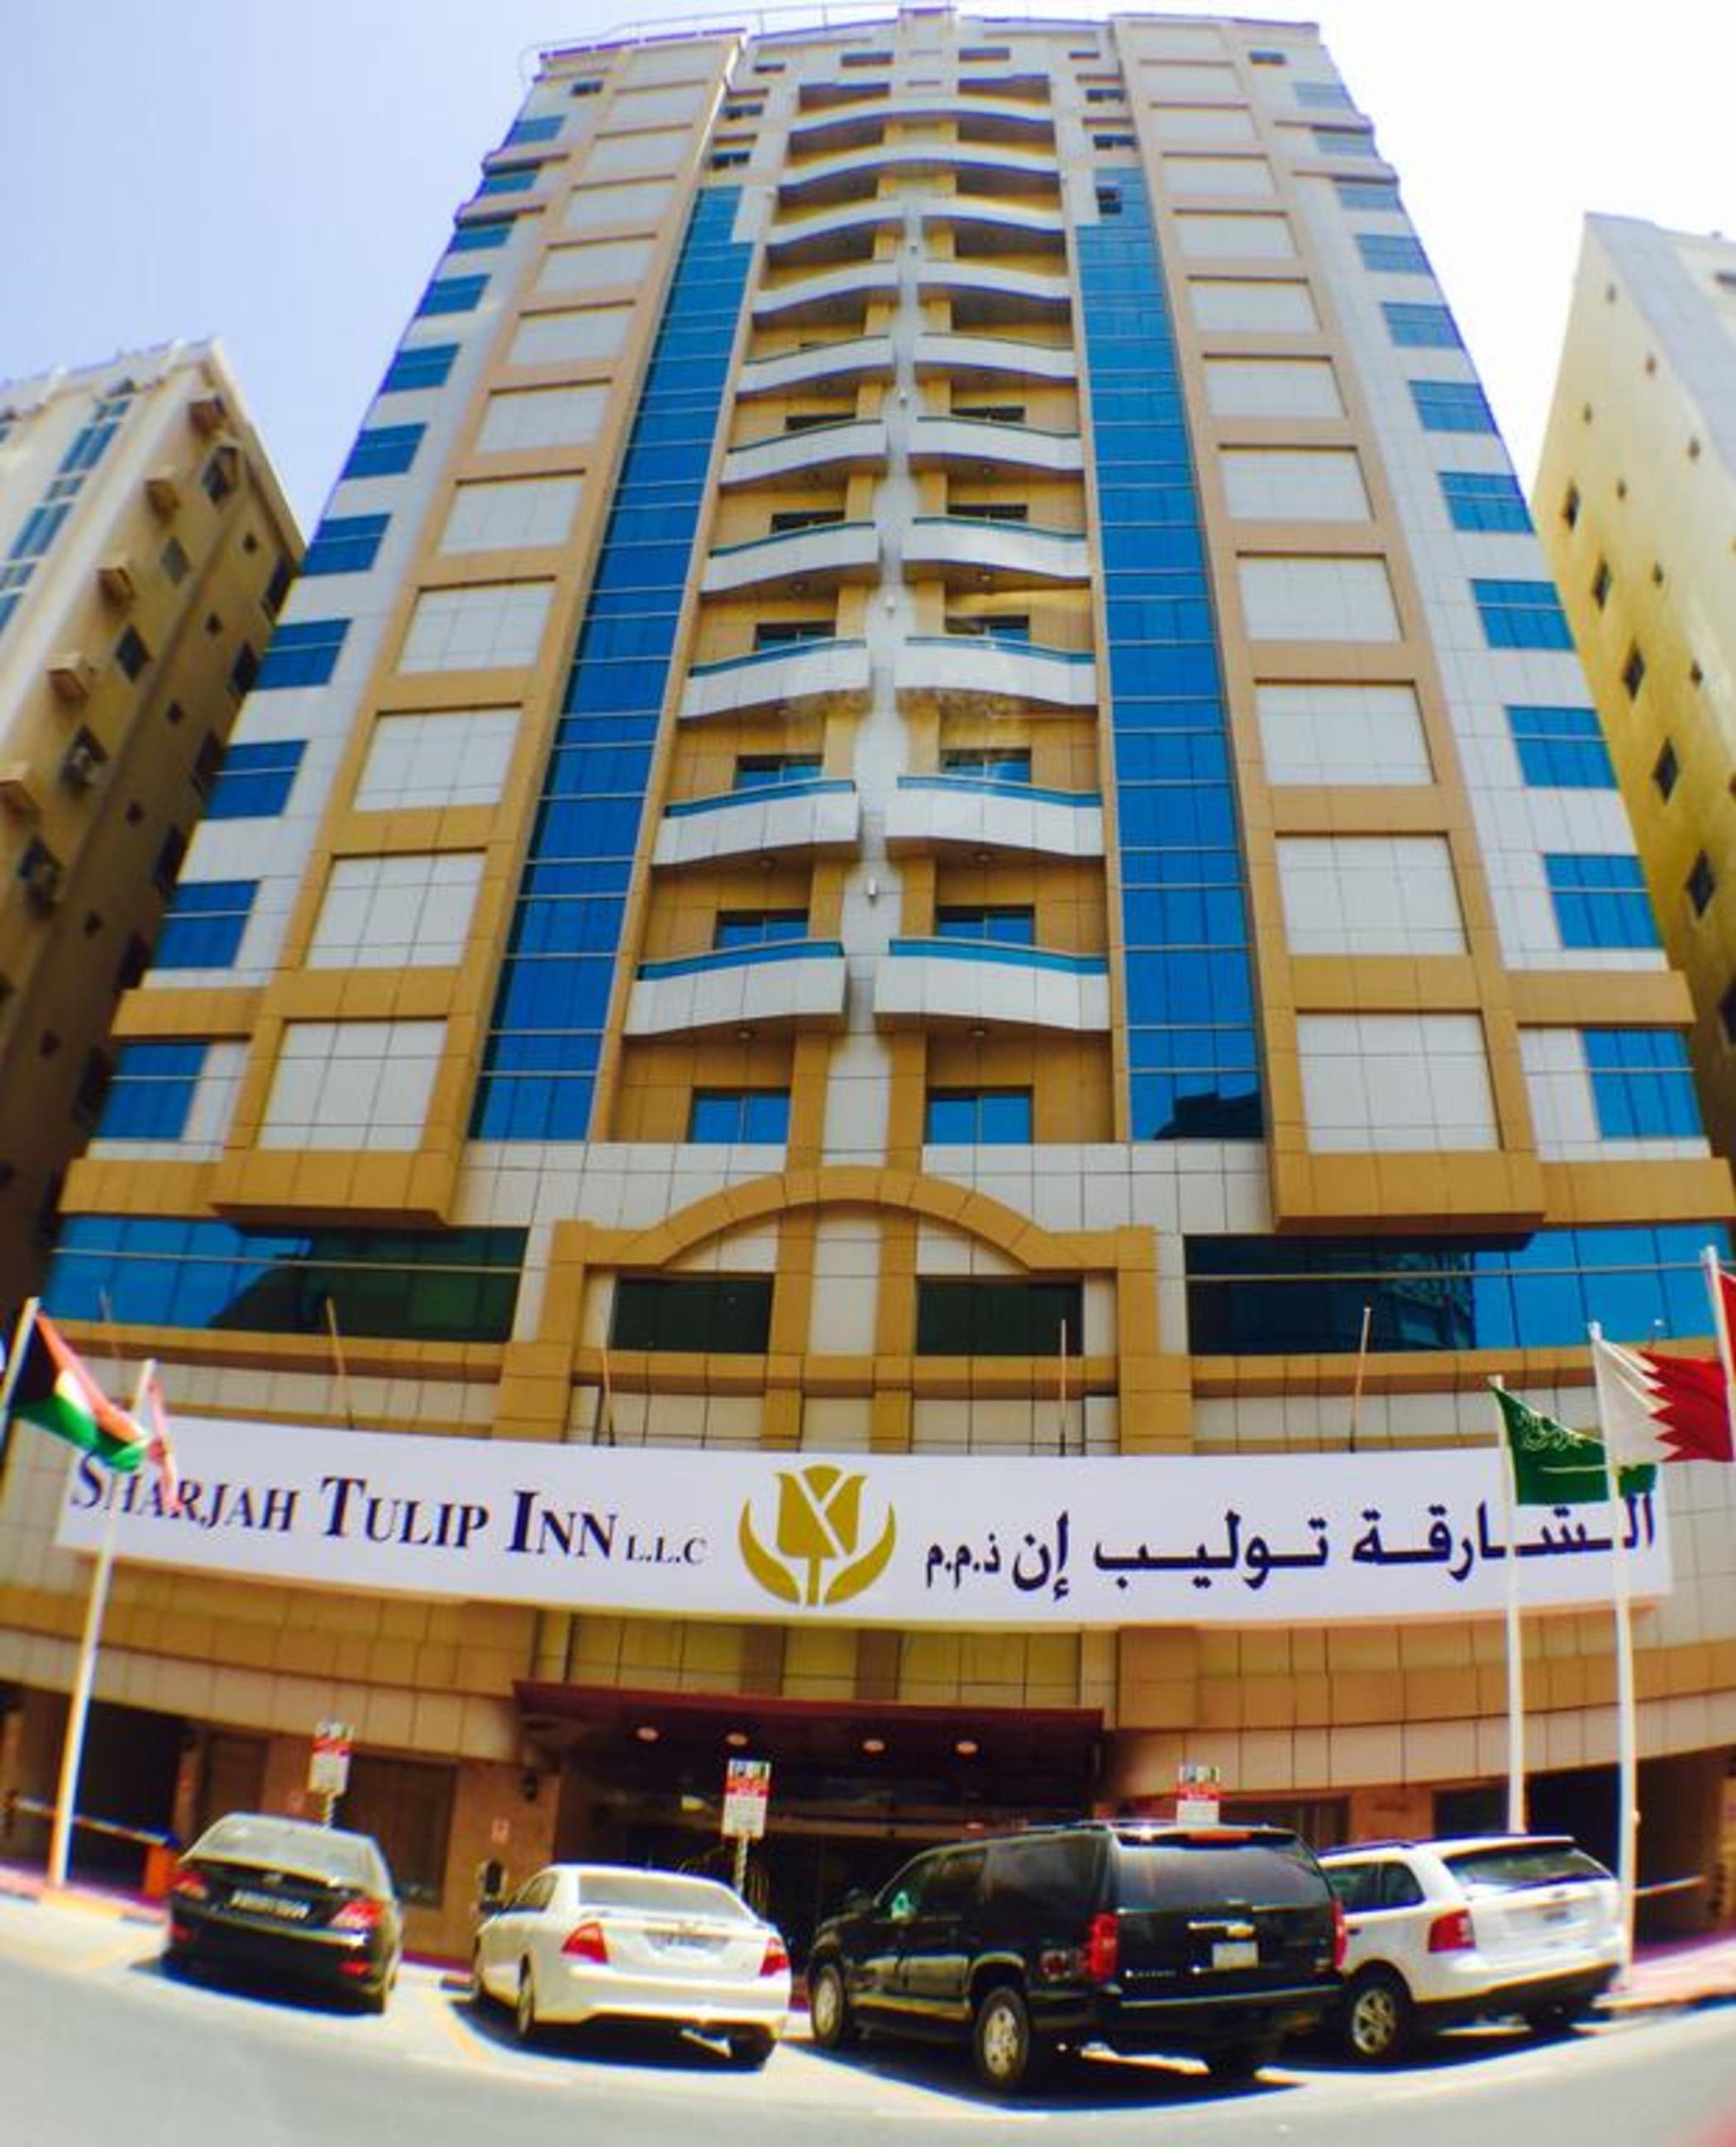 Sharjah Royal Tulip Hotel Apartments توليب رويال الشارقة Exterior foto